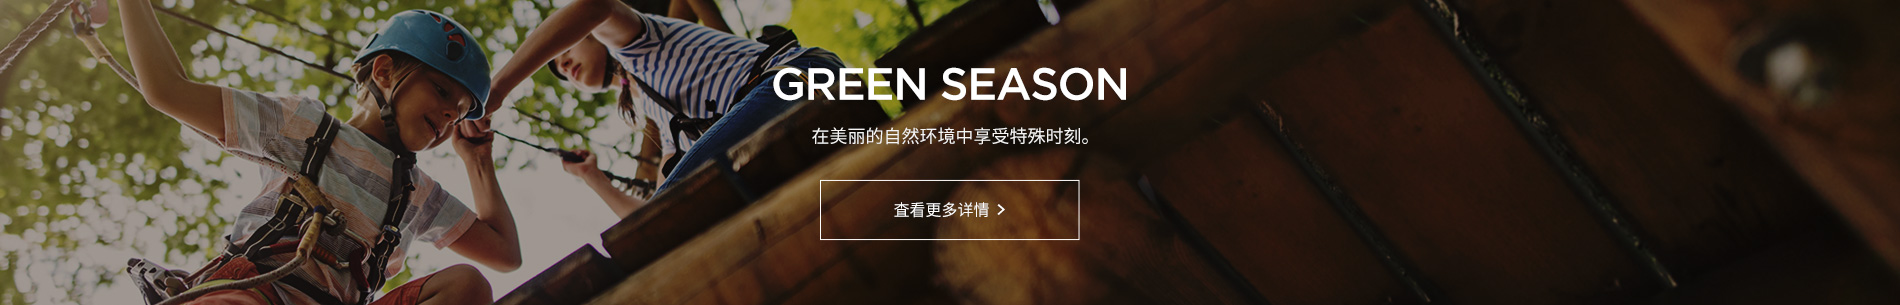 Green Season Banner